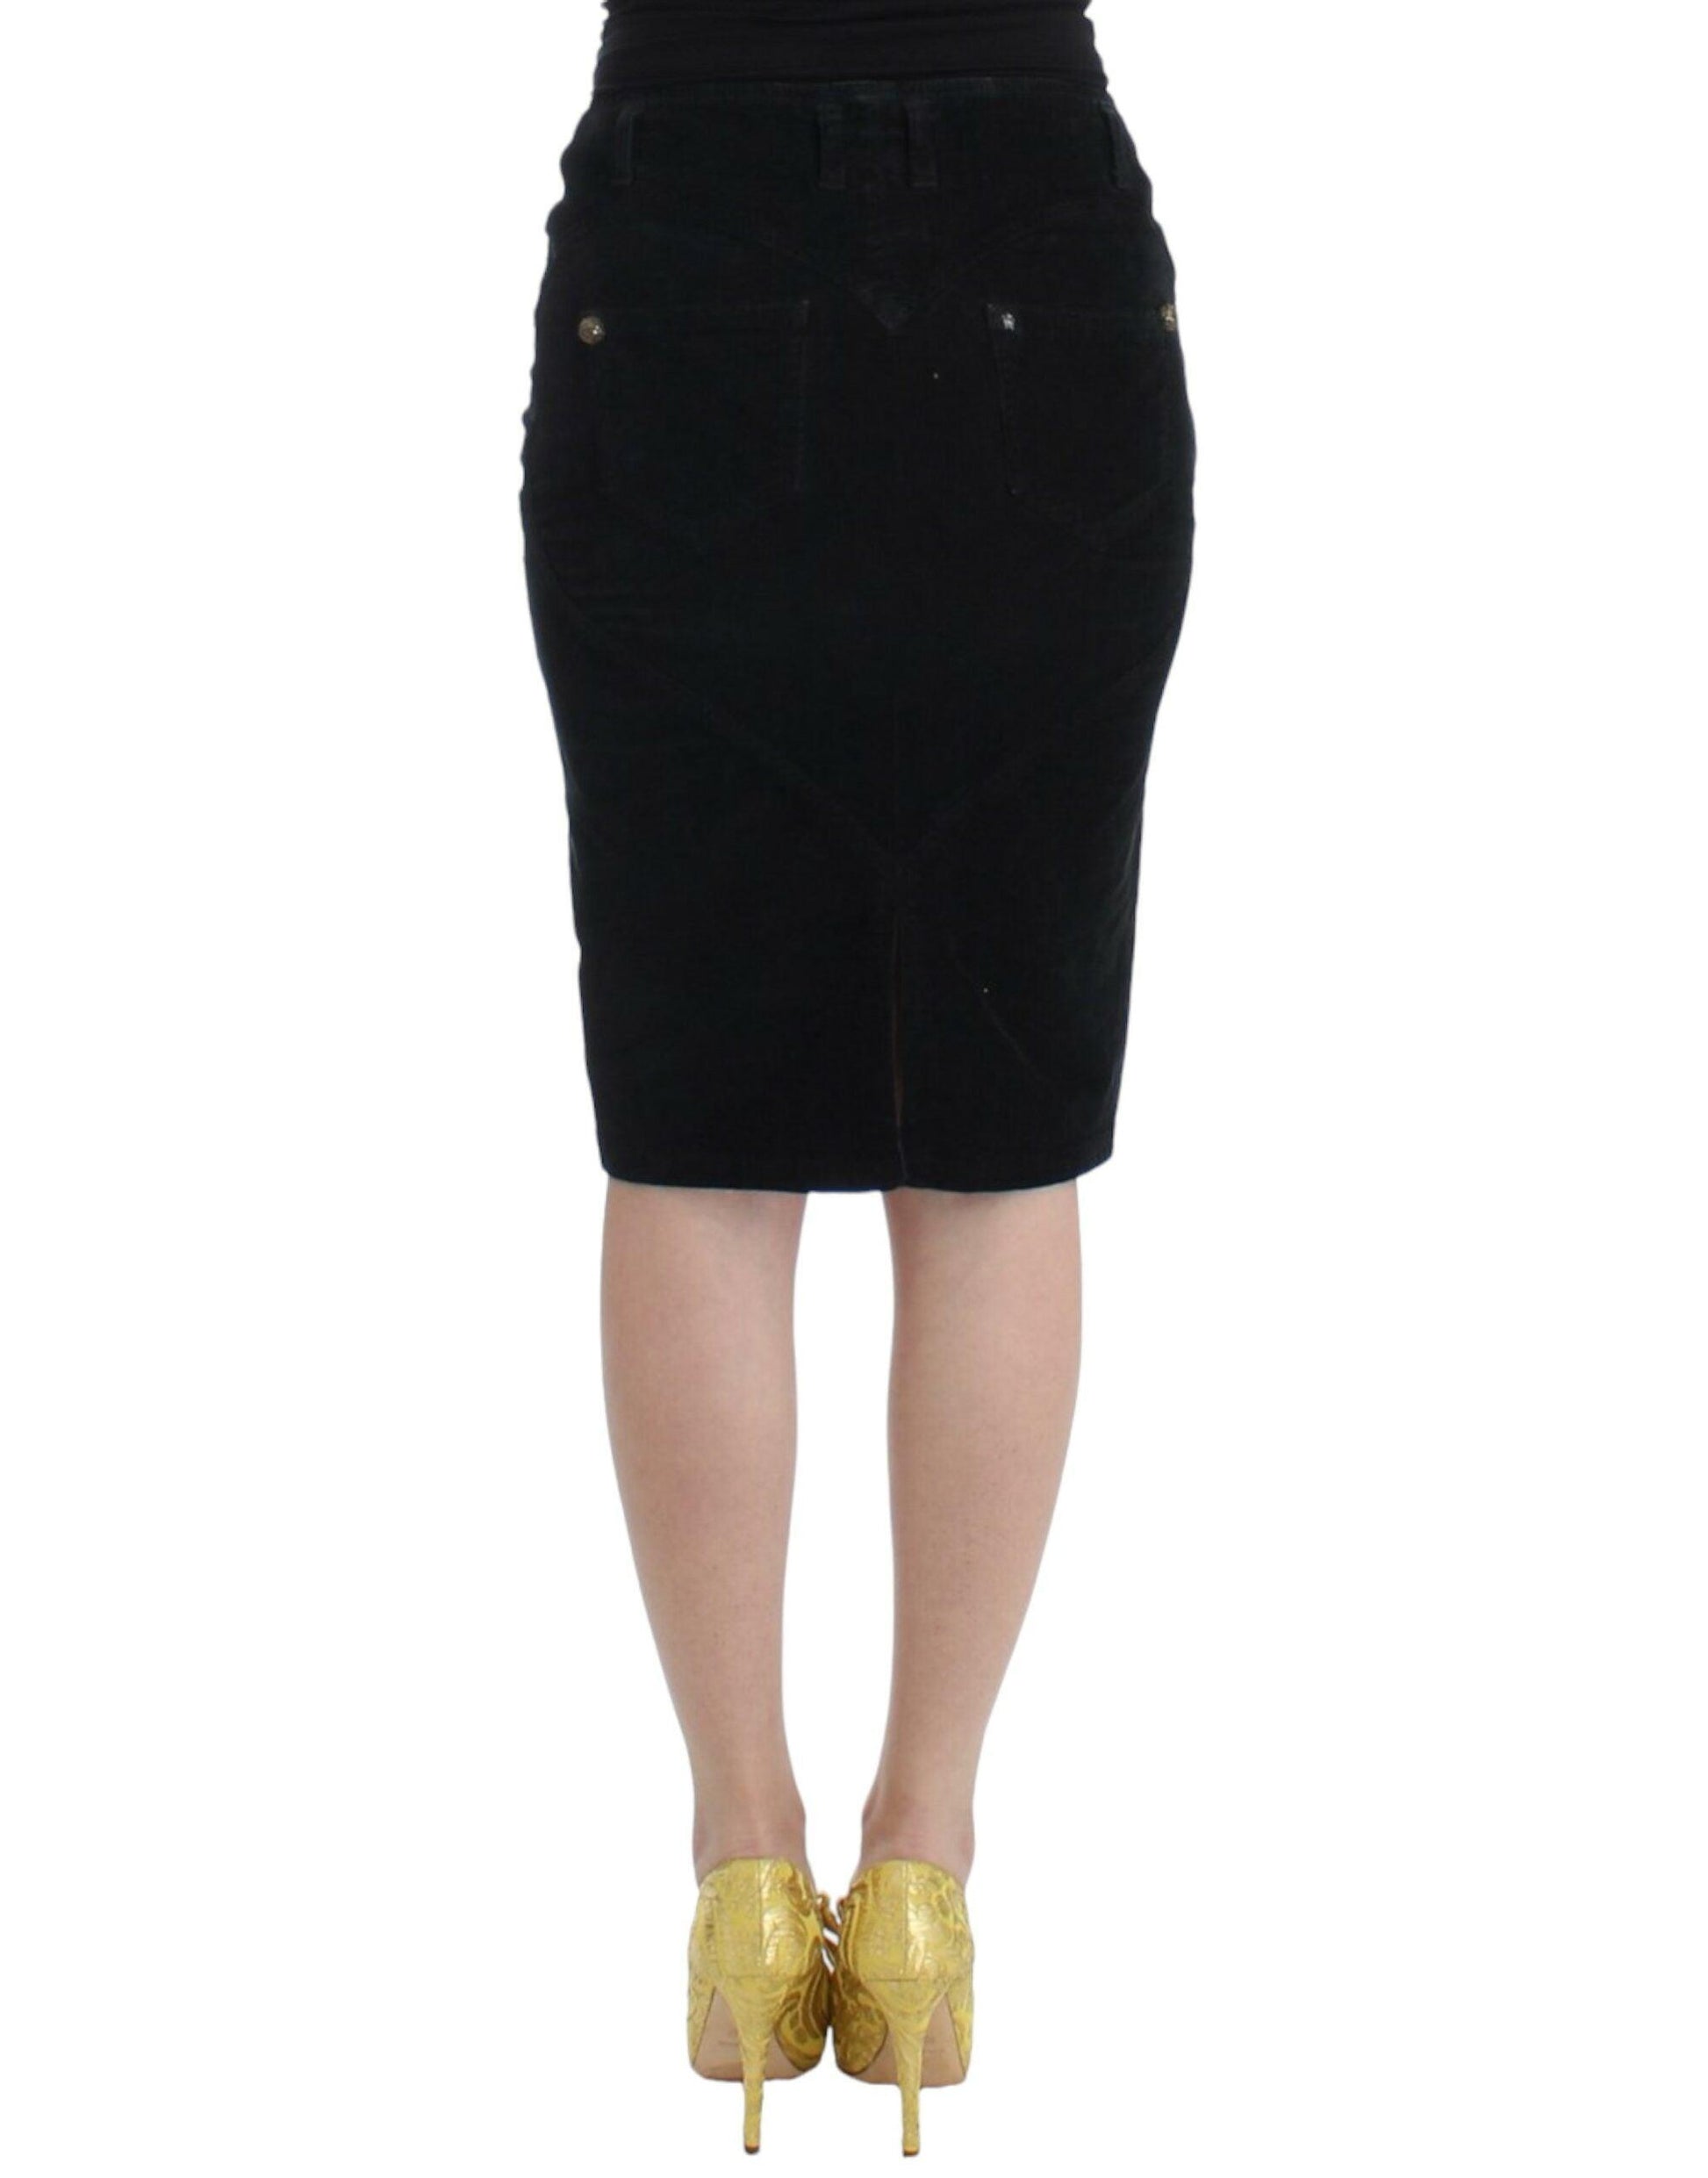 Cavalli Elegant Black Pencil Skirt for Sophisticated Style - PER.FASHION